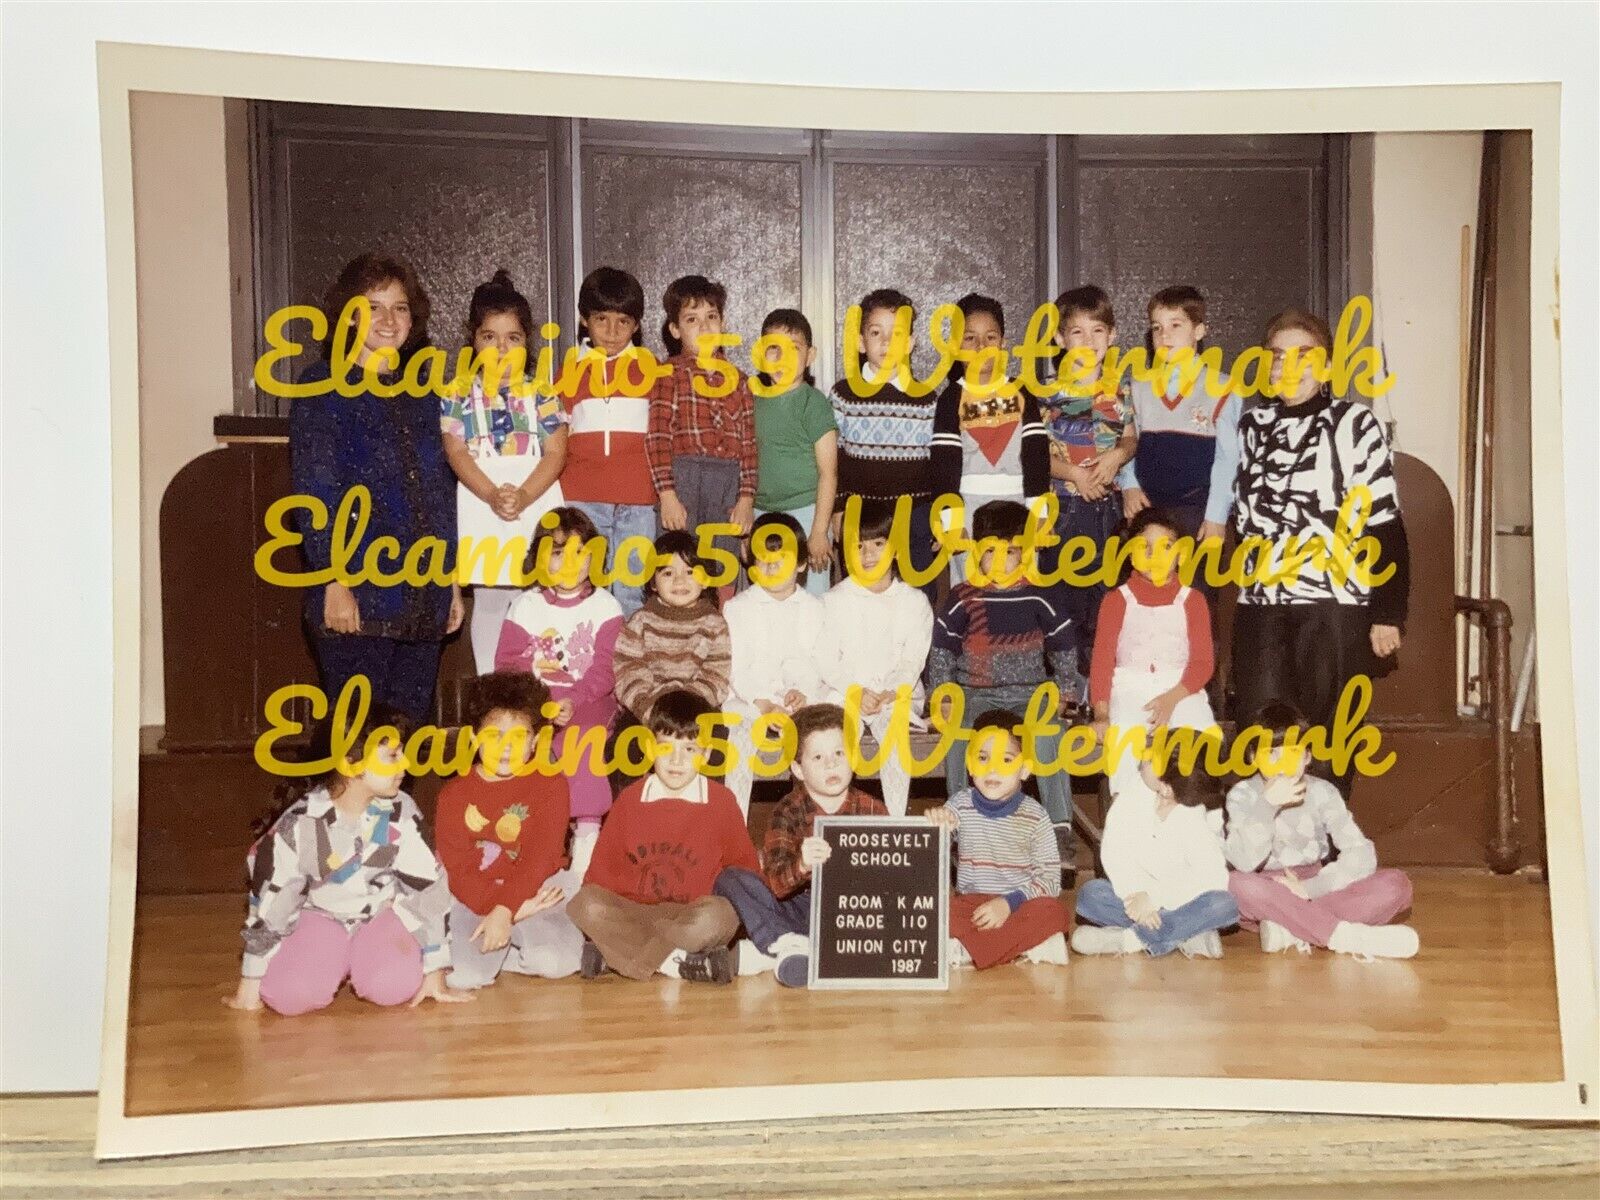 1987 Roosevelt Elementary Photo Emerson Union Hill High School City NJ 1999 2000